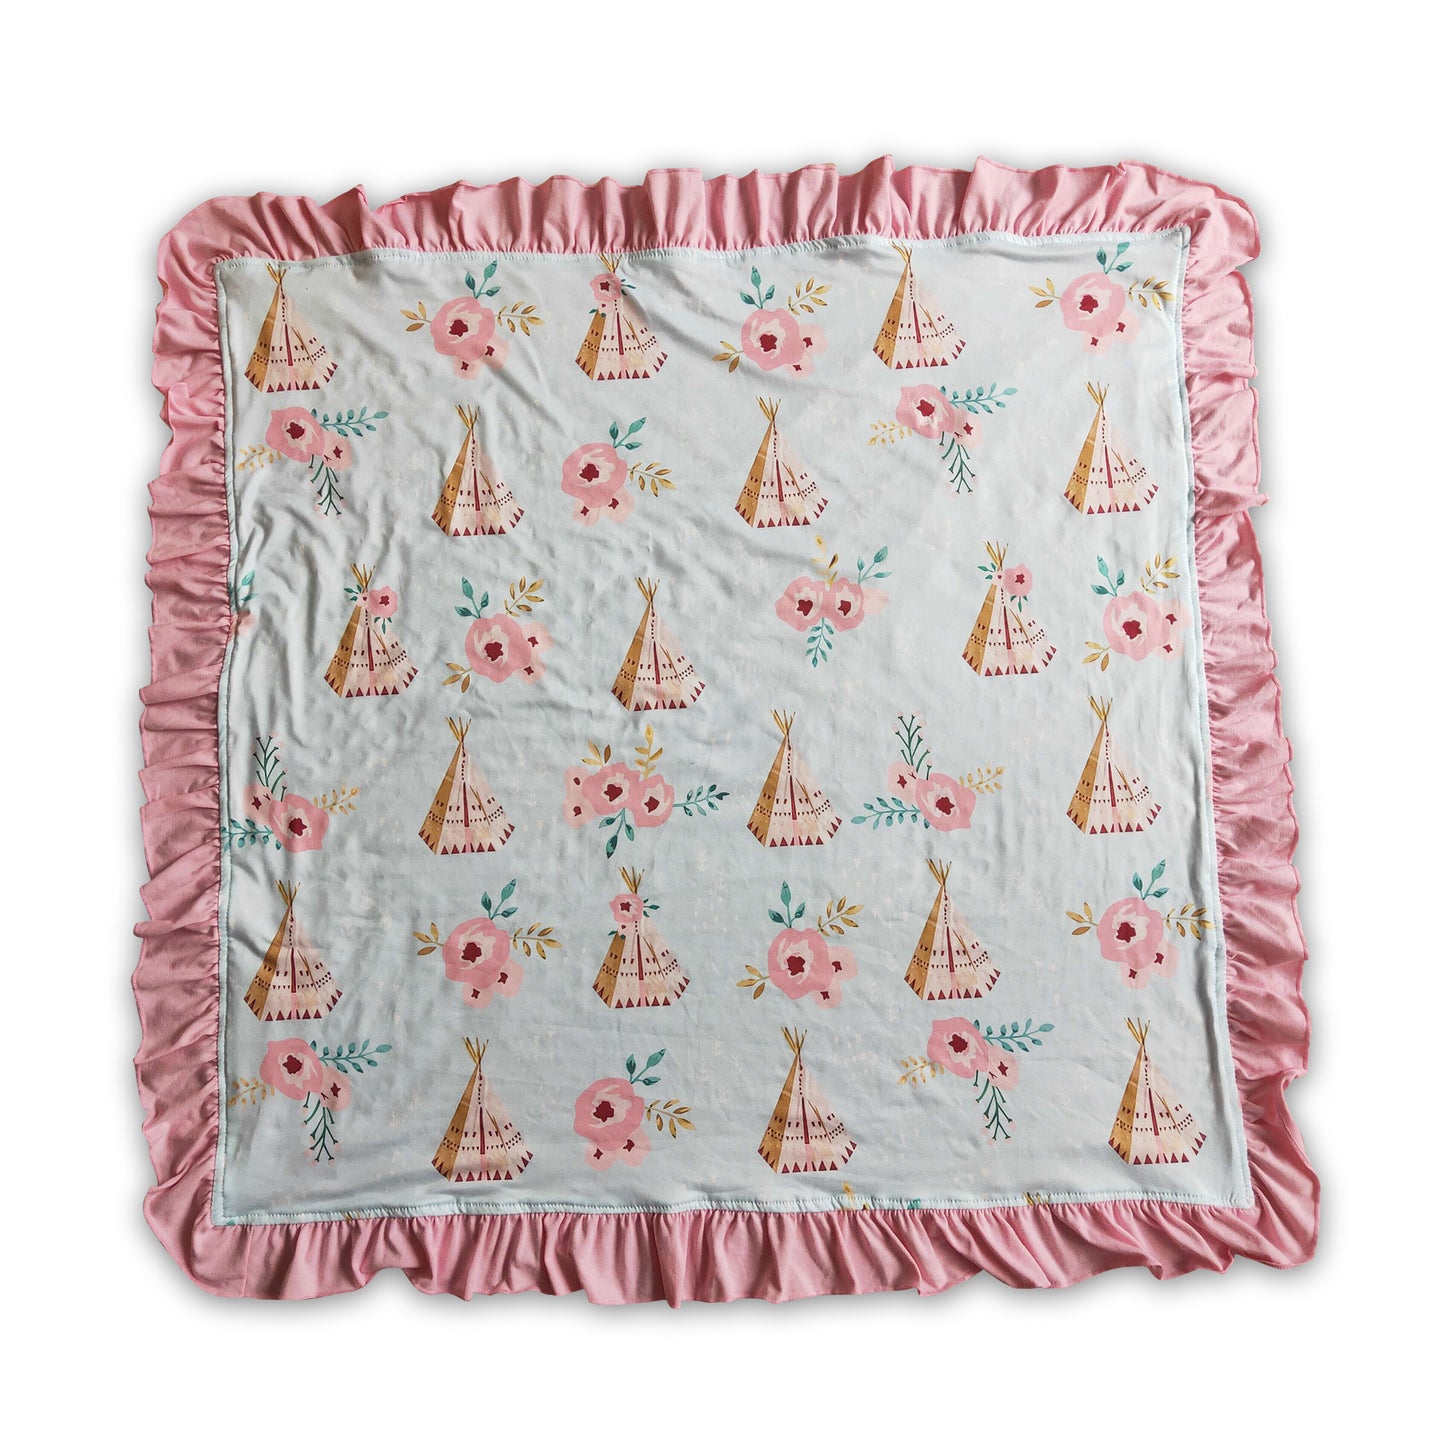 Teepee print floral minky baby blankets